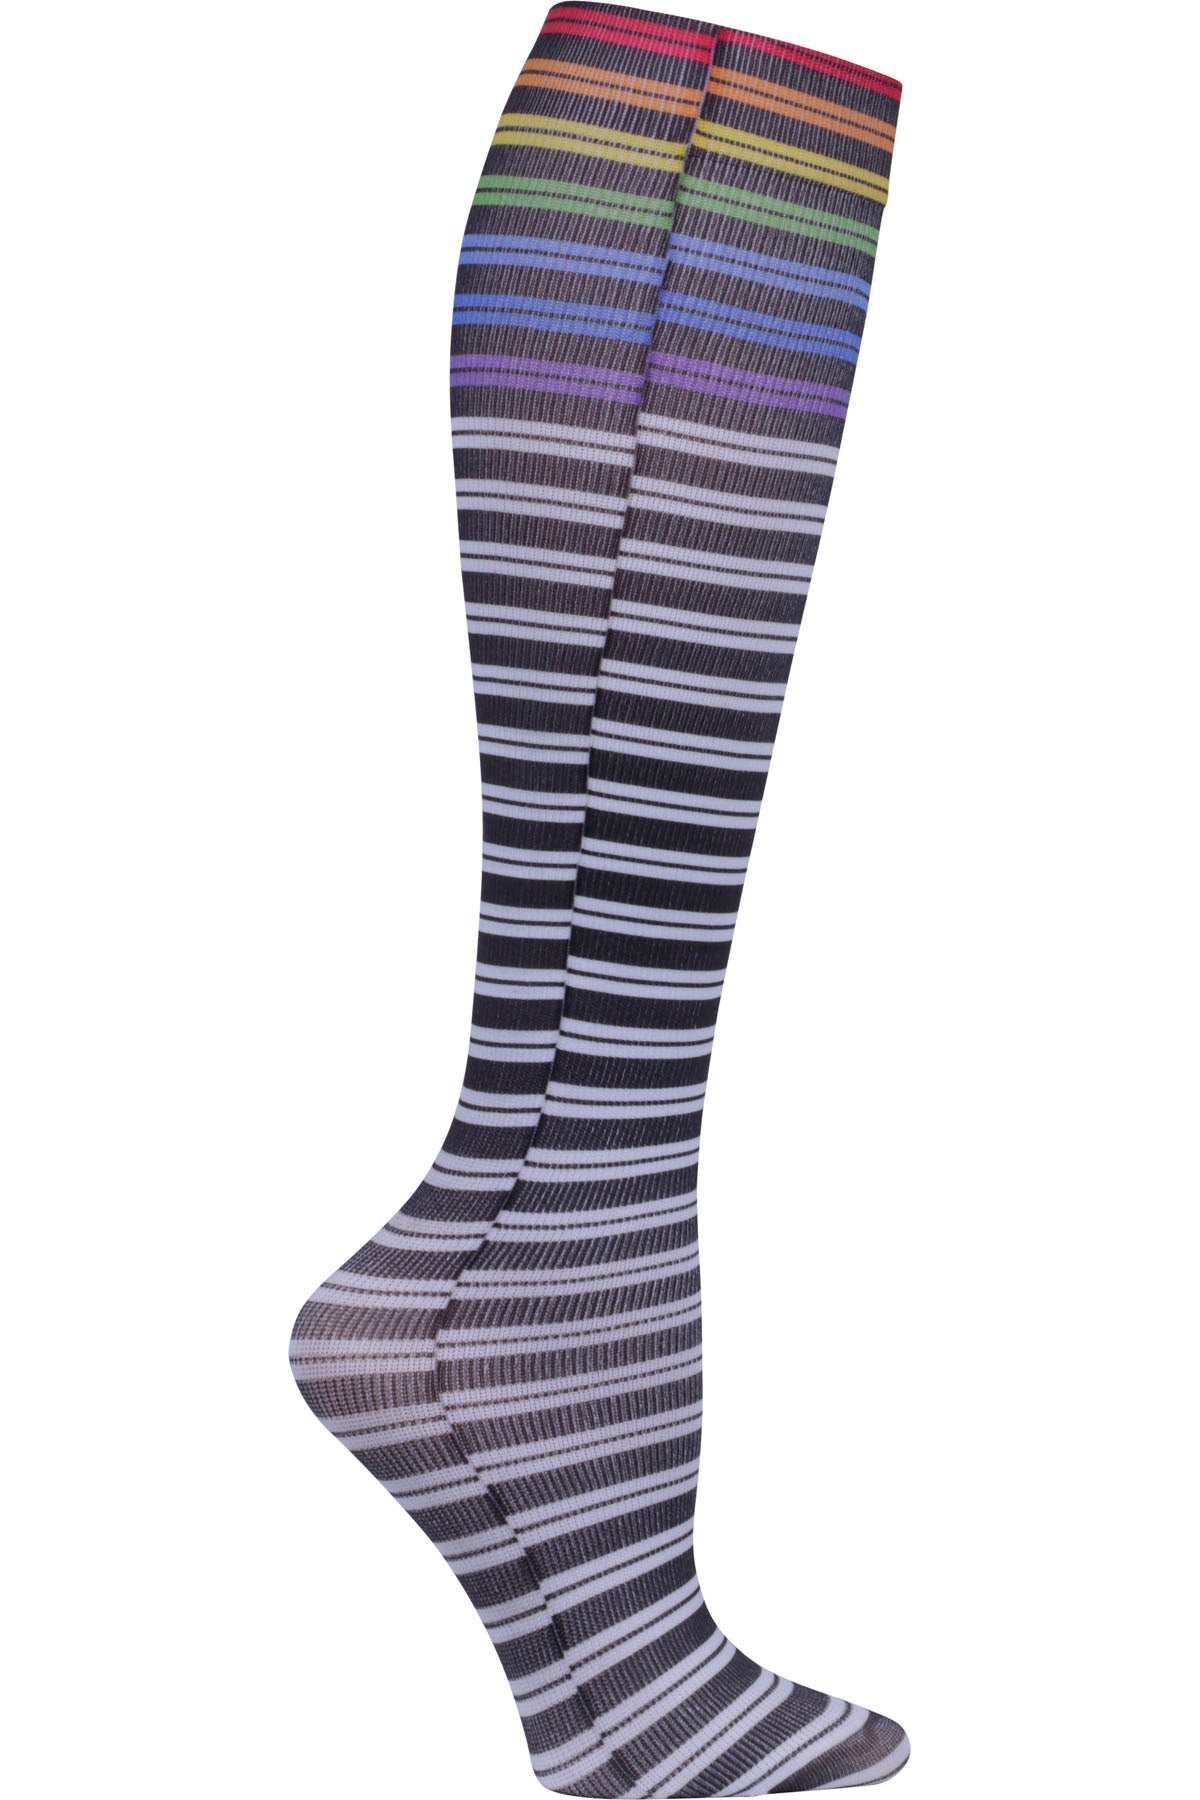 Celeste Stein Mild Compression Socks 8-15 mmHG Stripes at Parker's Clothing and Shoes.